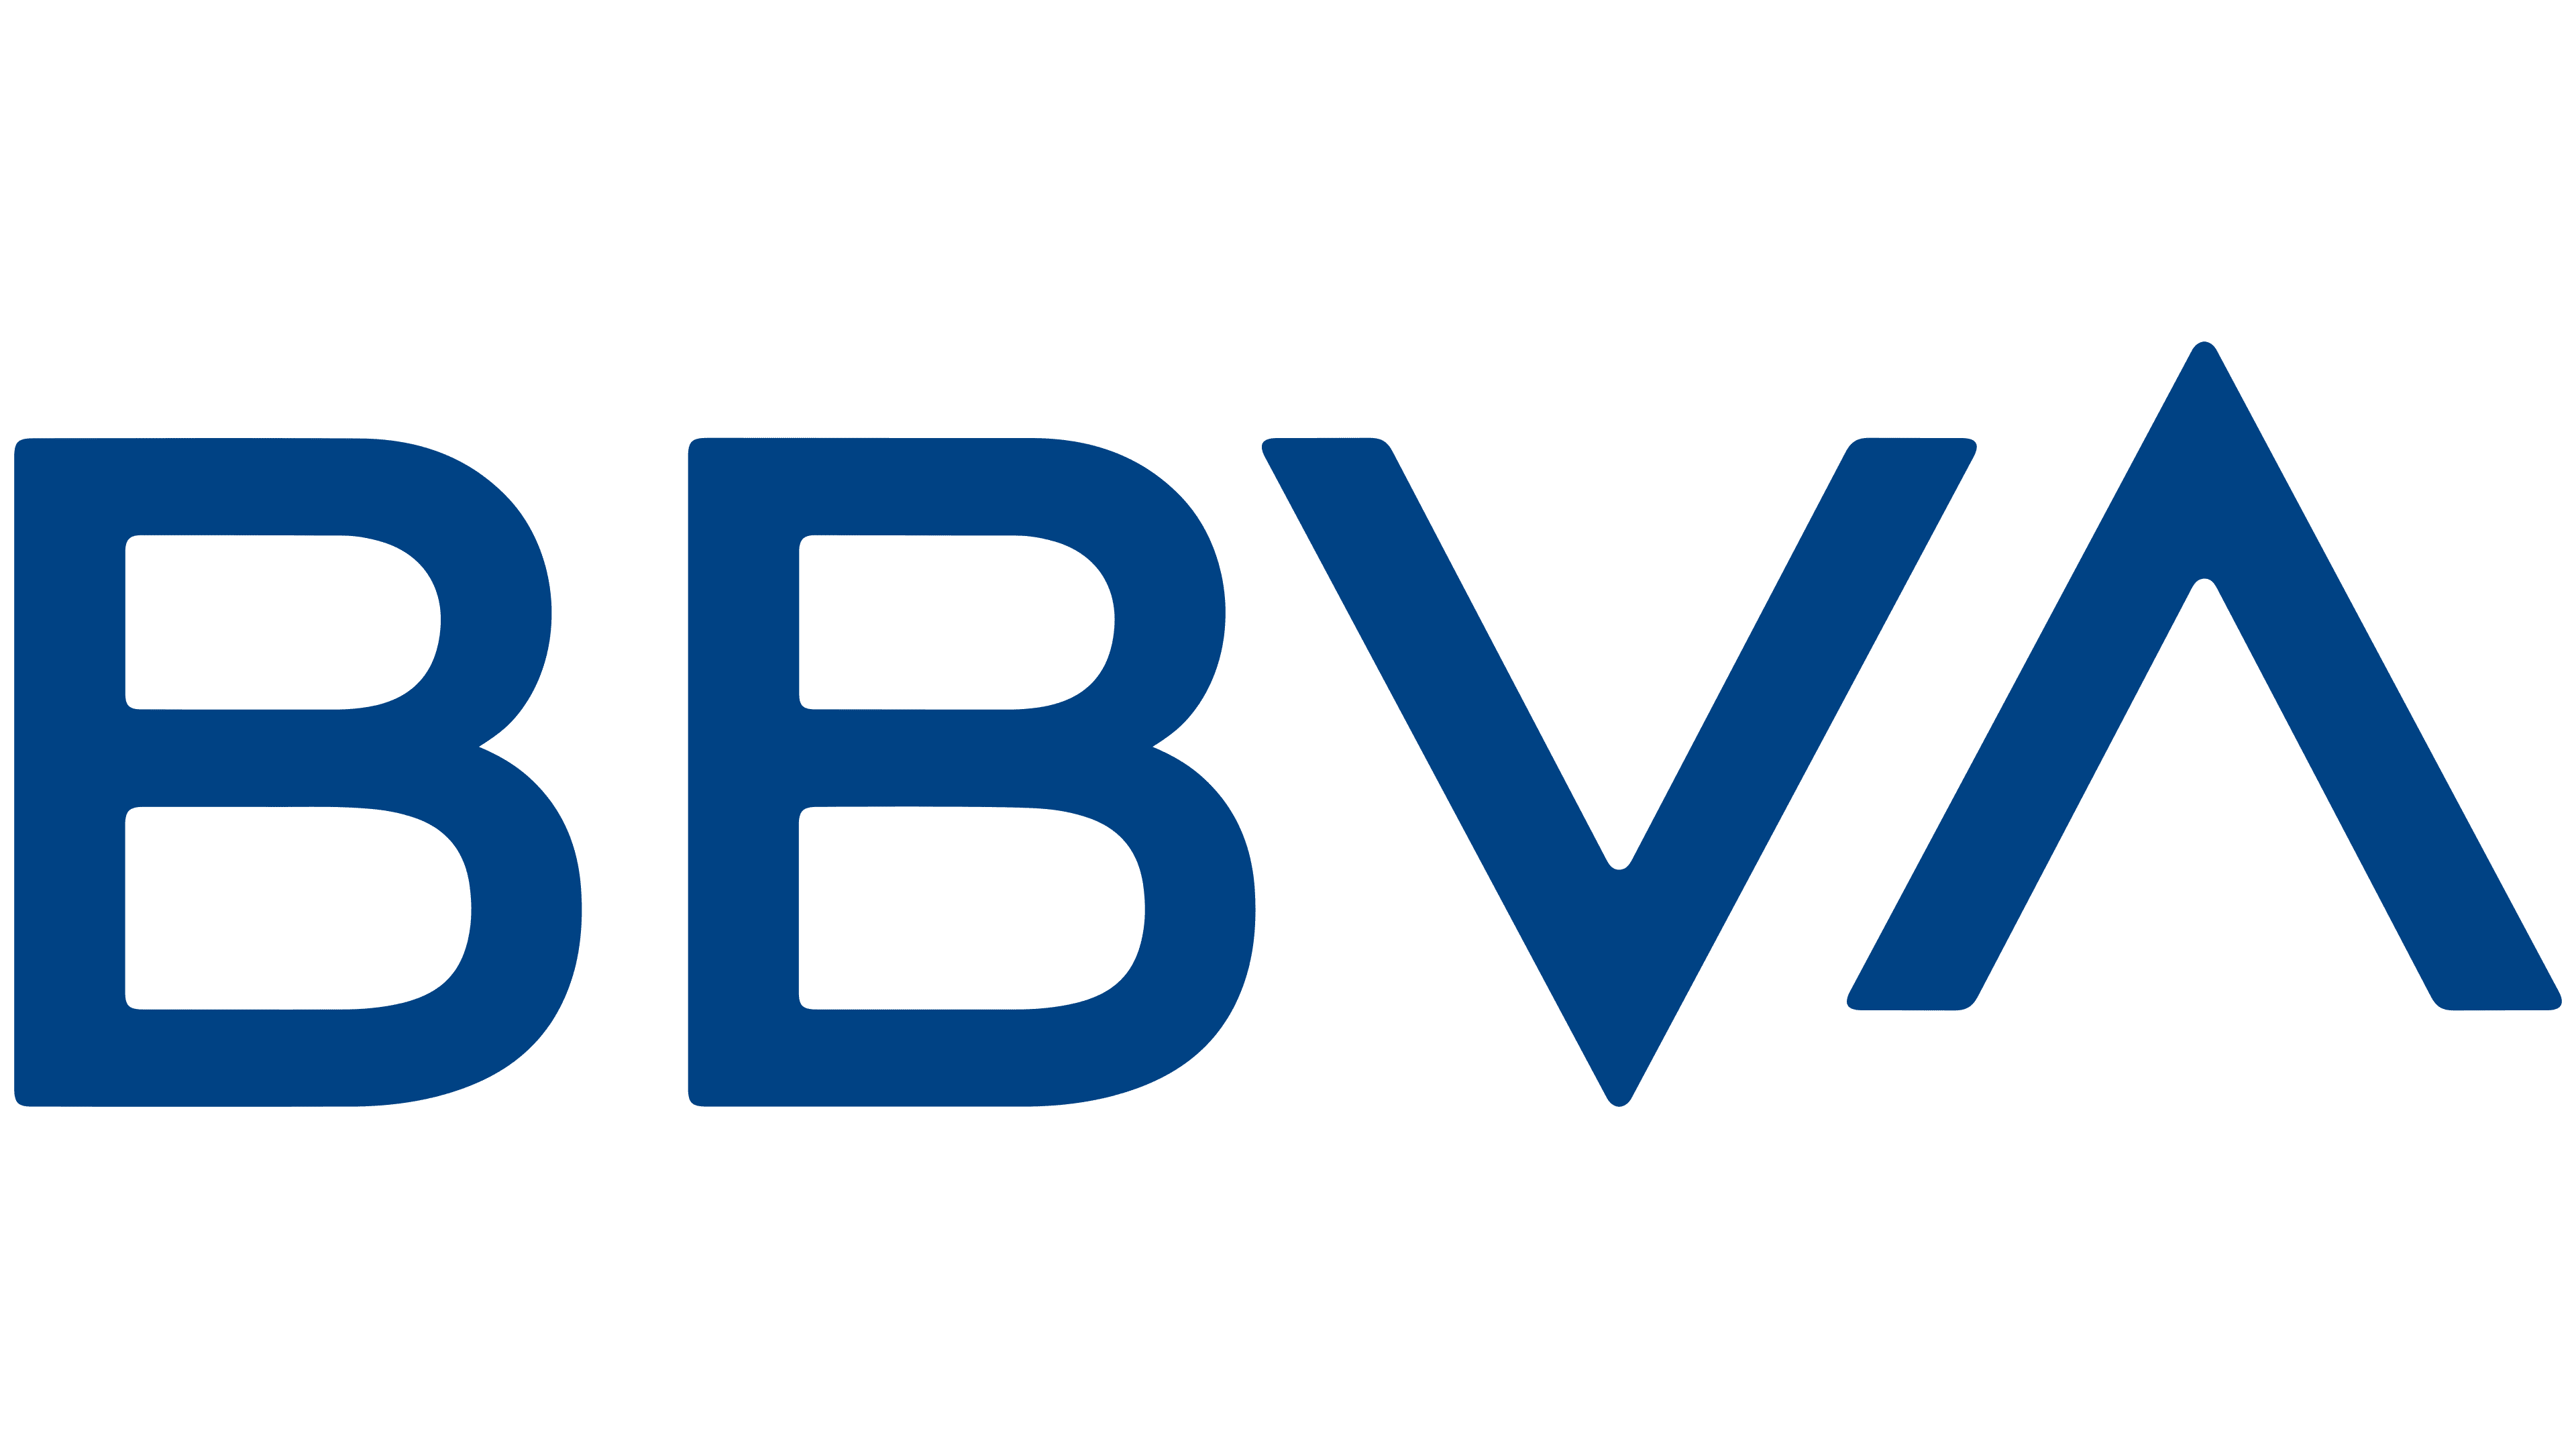 BBVA Logo : histoire, signification de l'emblème